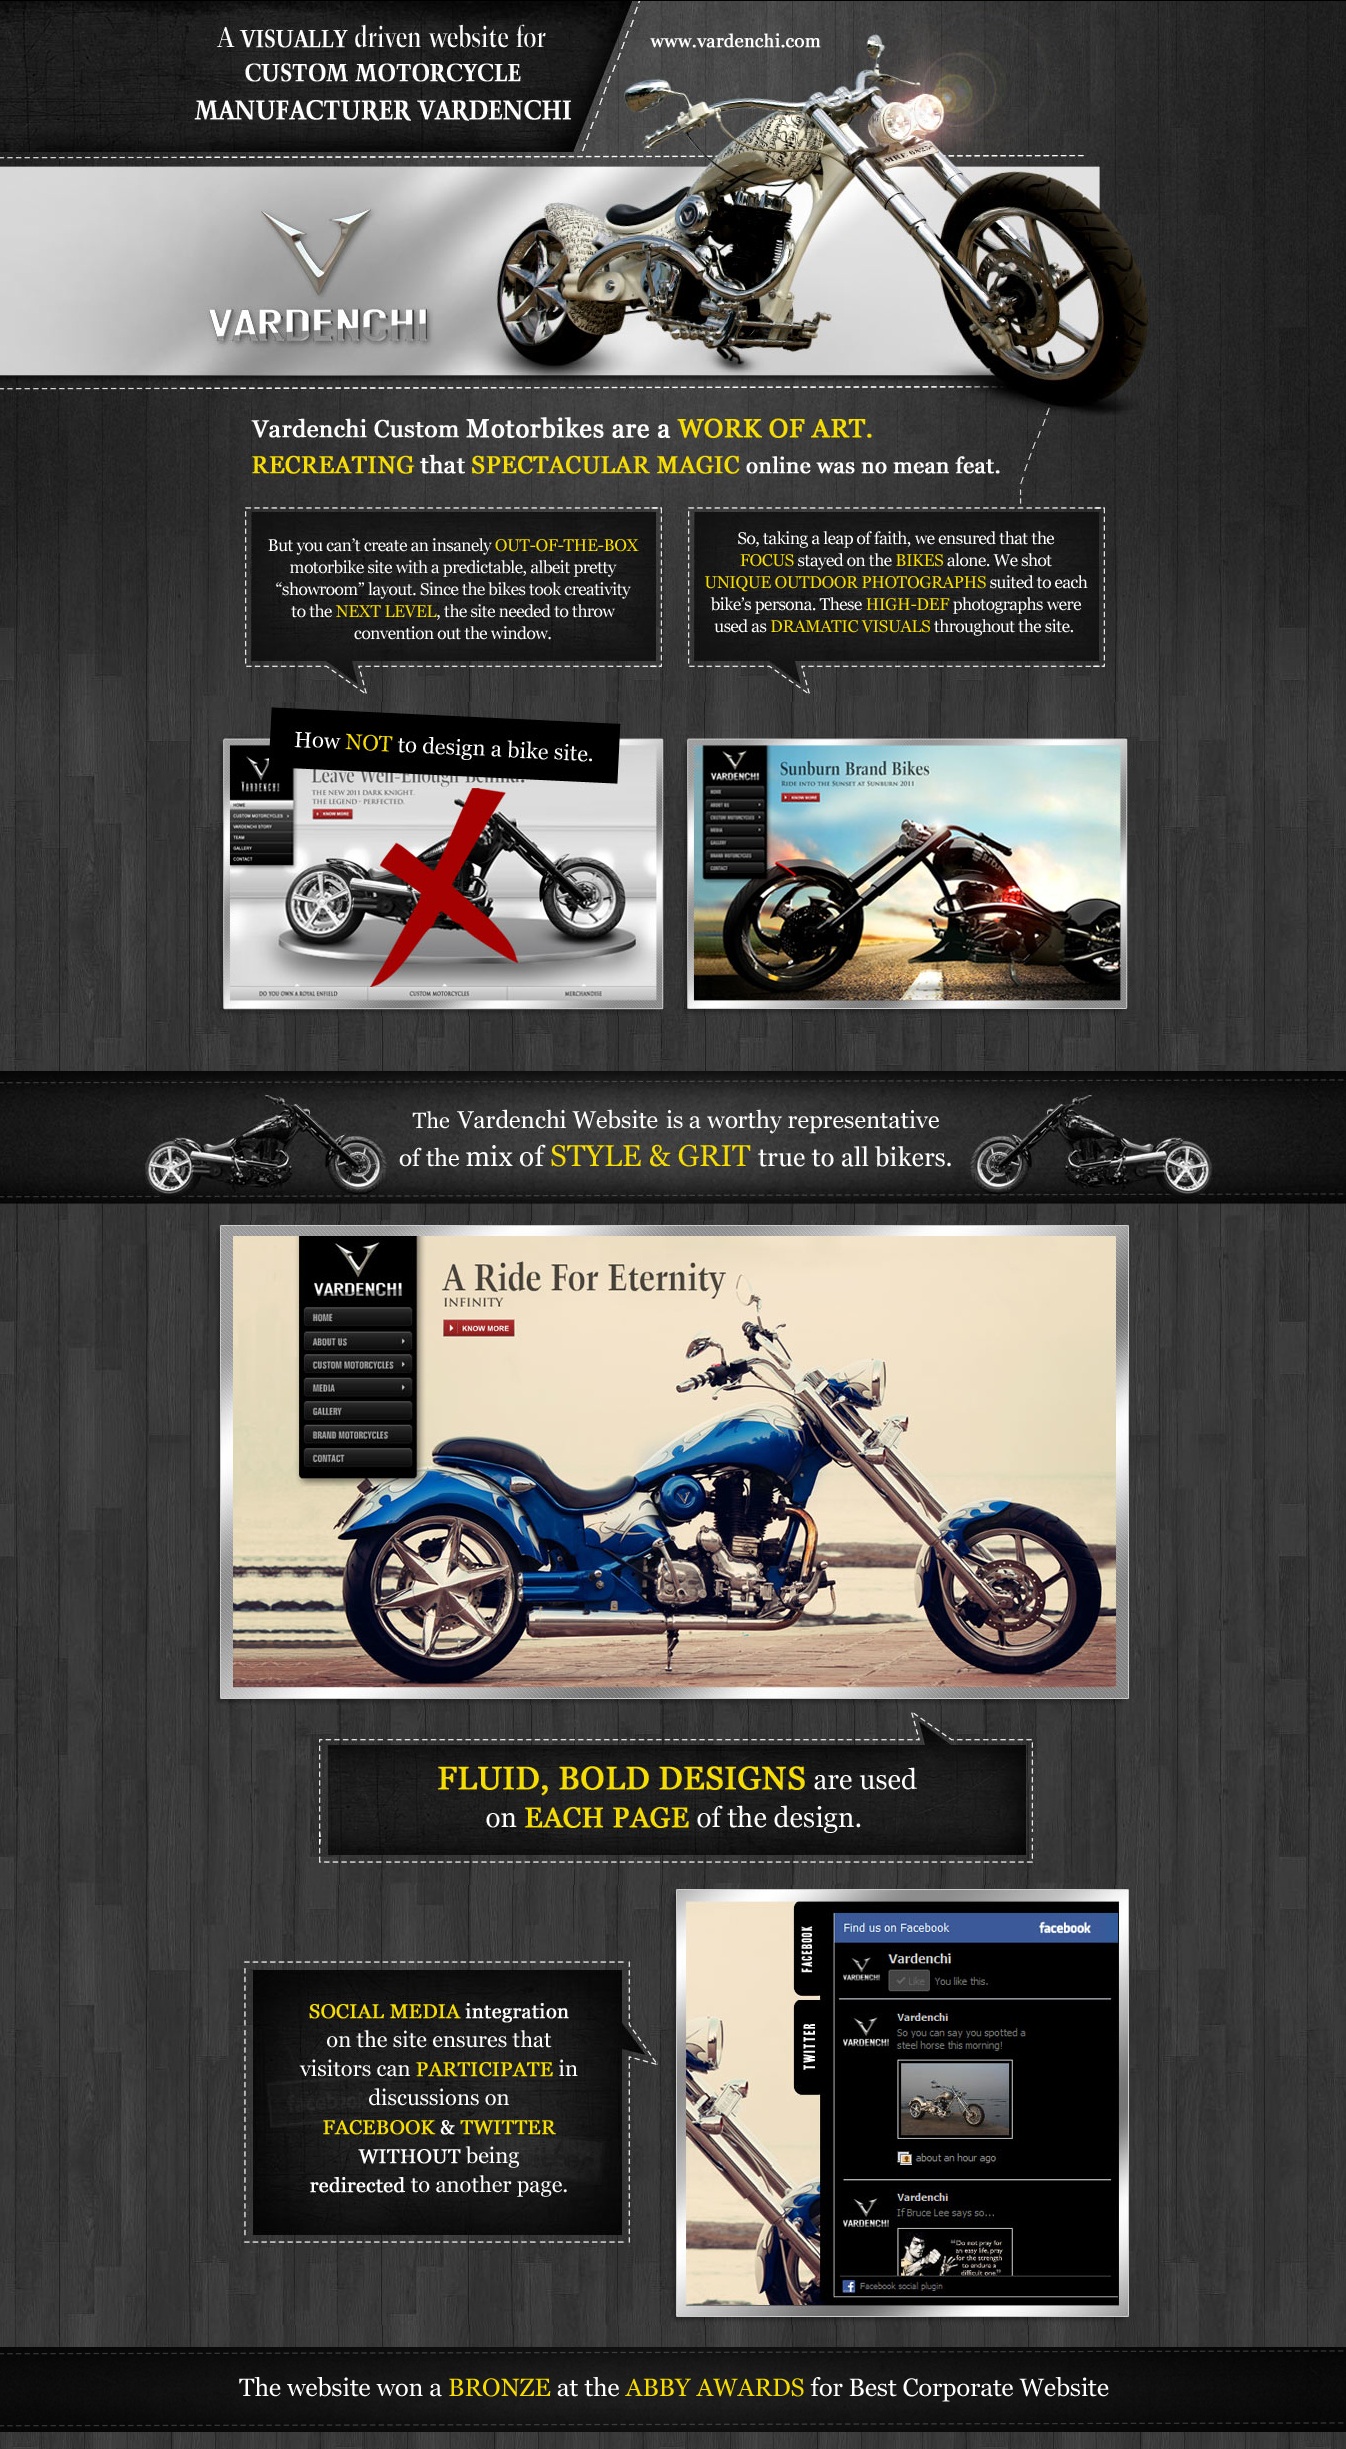 Award Winning Website for Vardenchi Custom Motorcycles